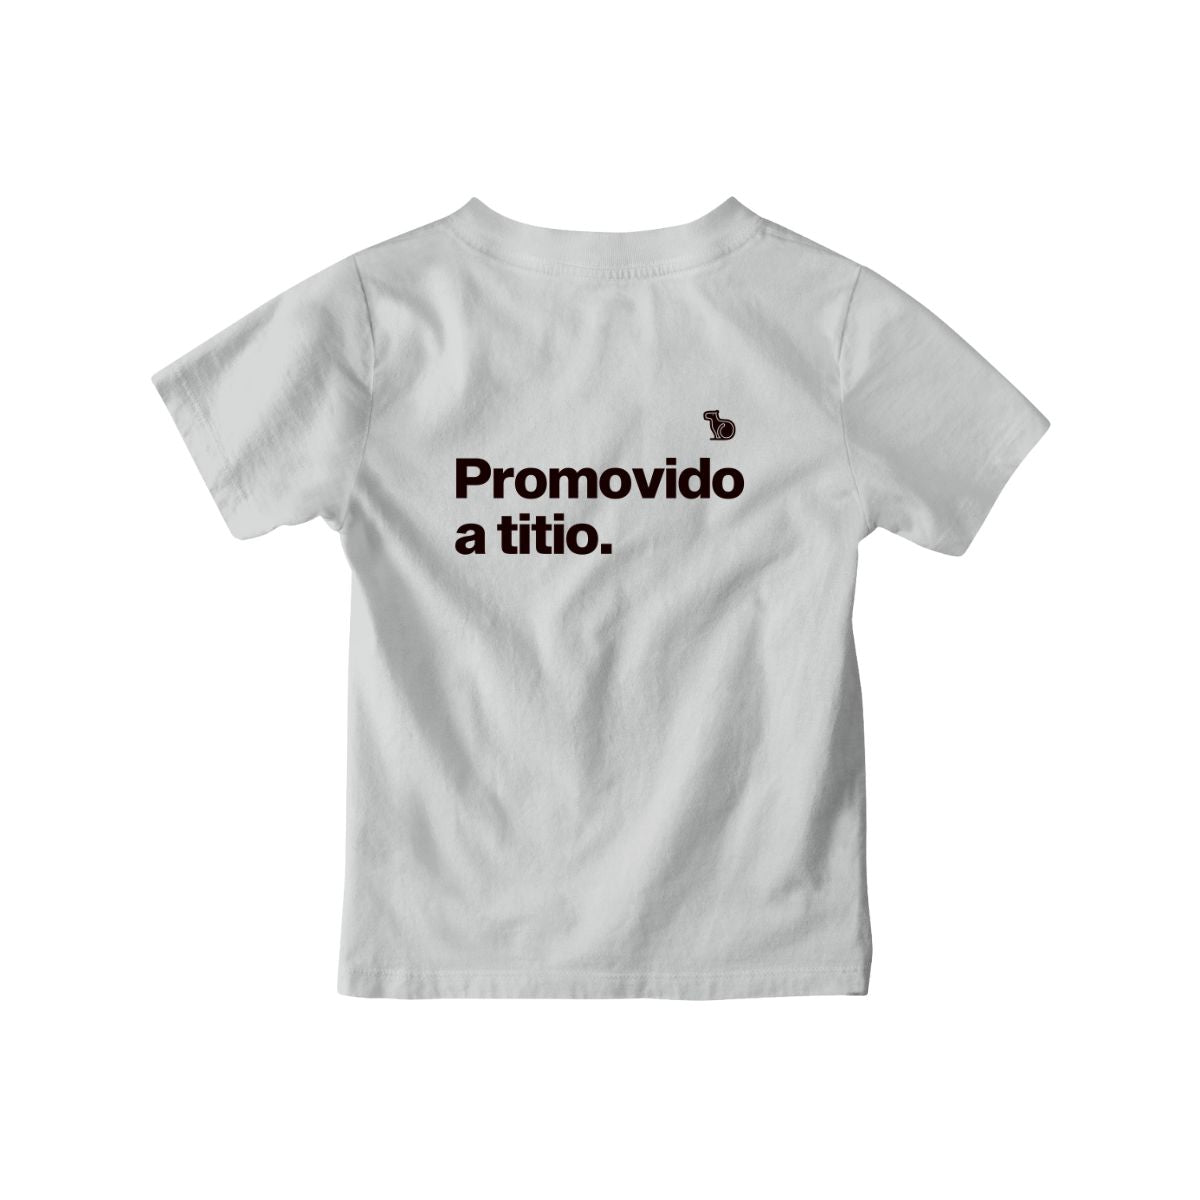 Camiseta infantil com a frase "Promovido a titio." na cor cinza.